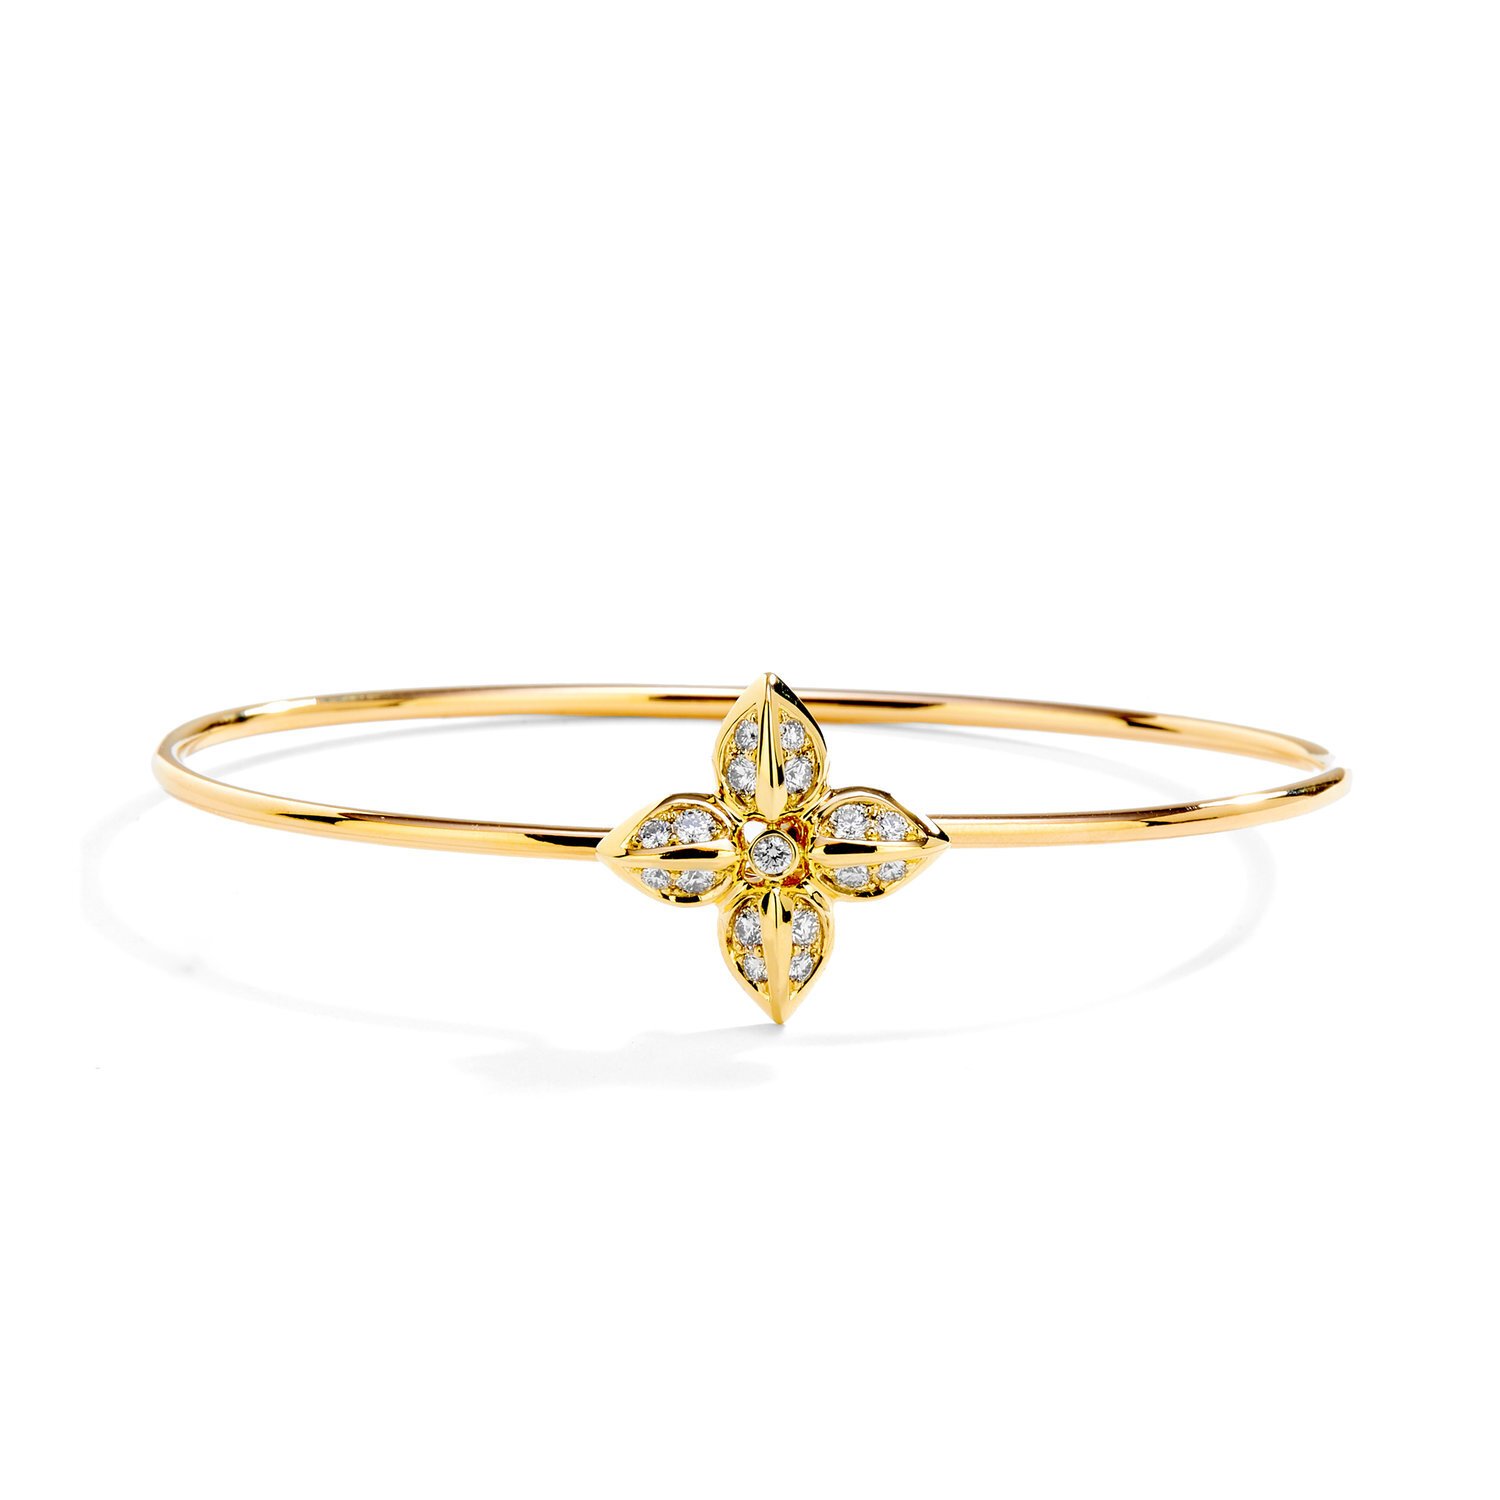 18kyg flower bracelet with diamonds